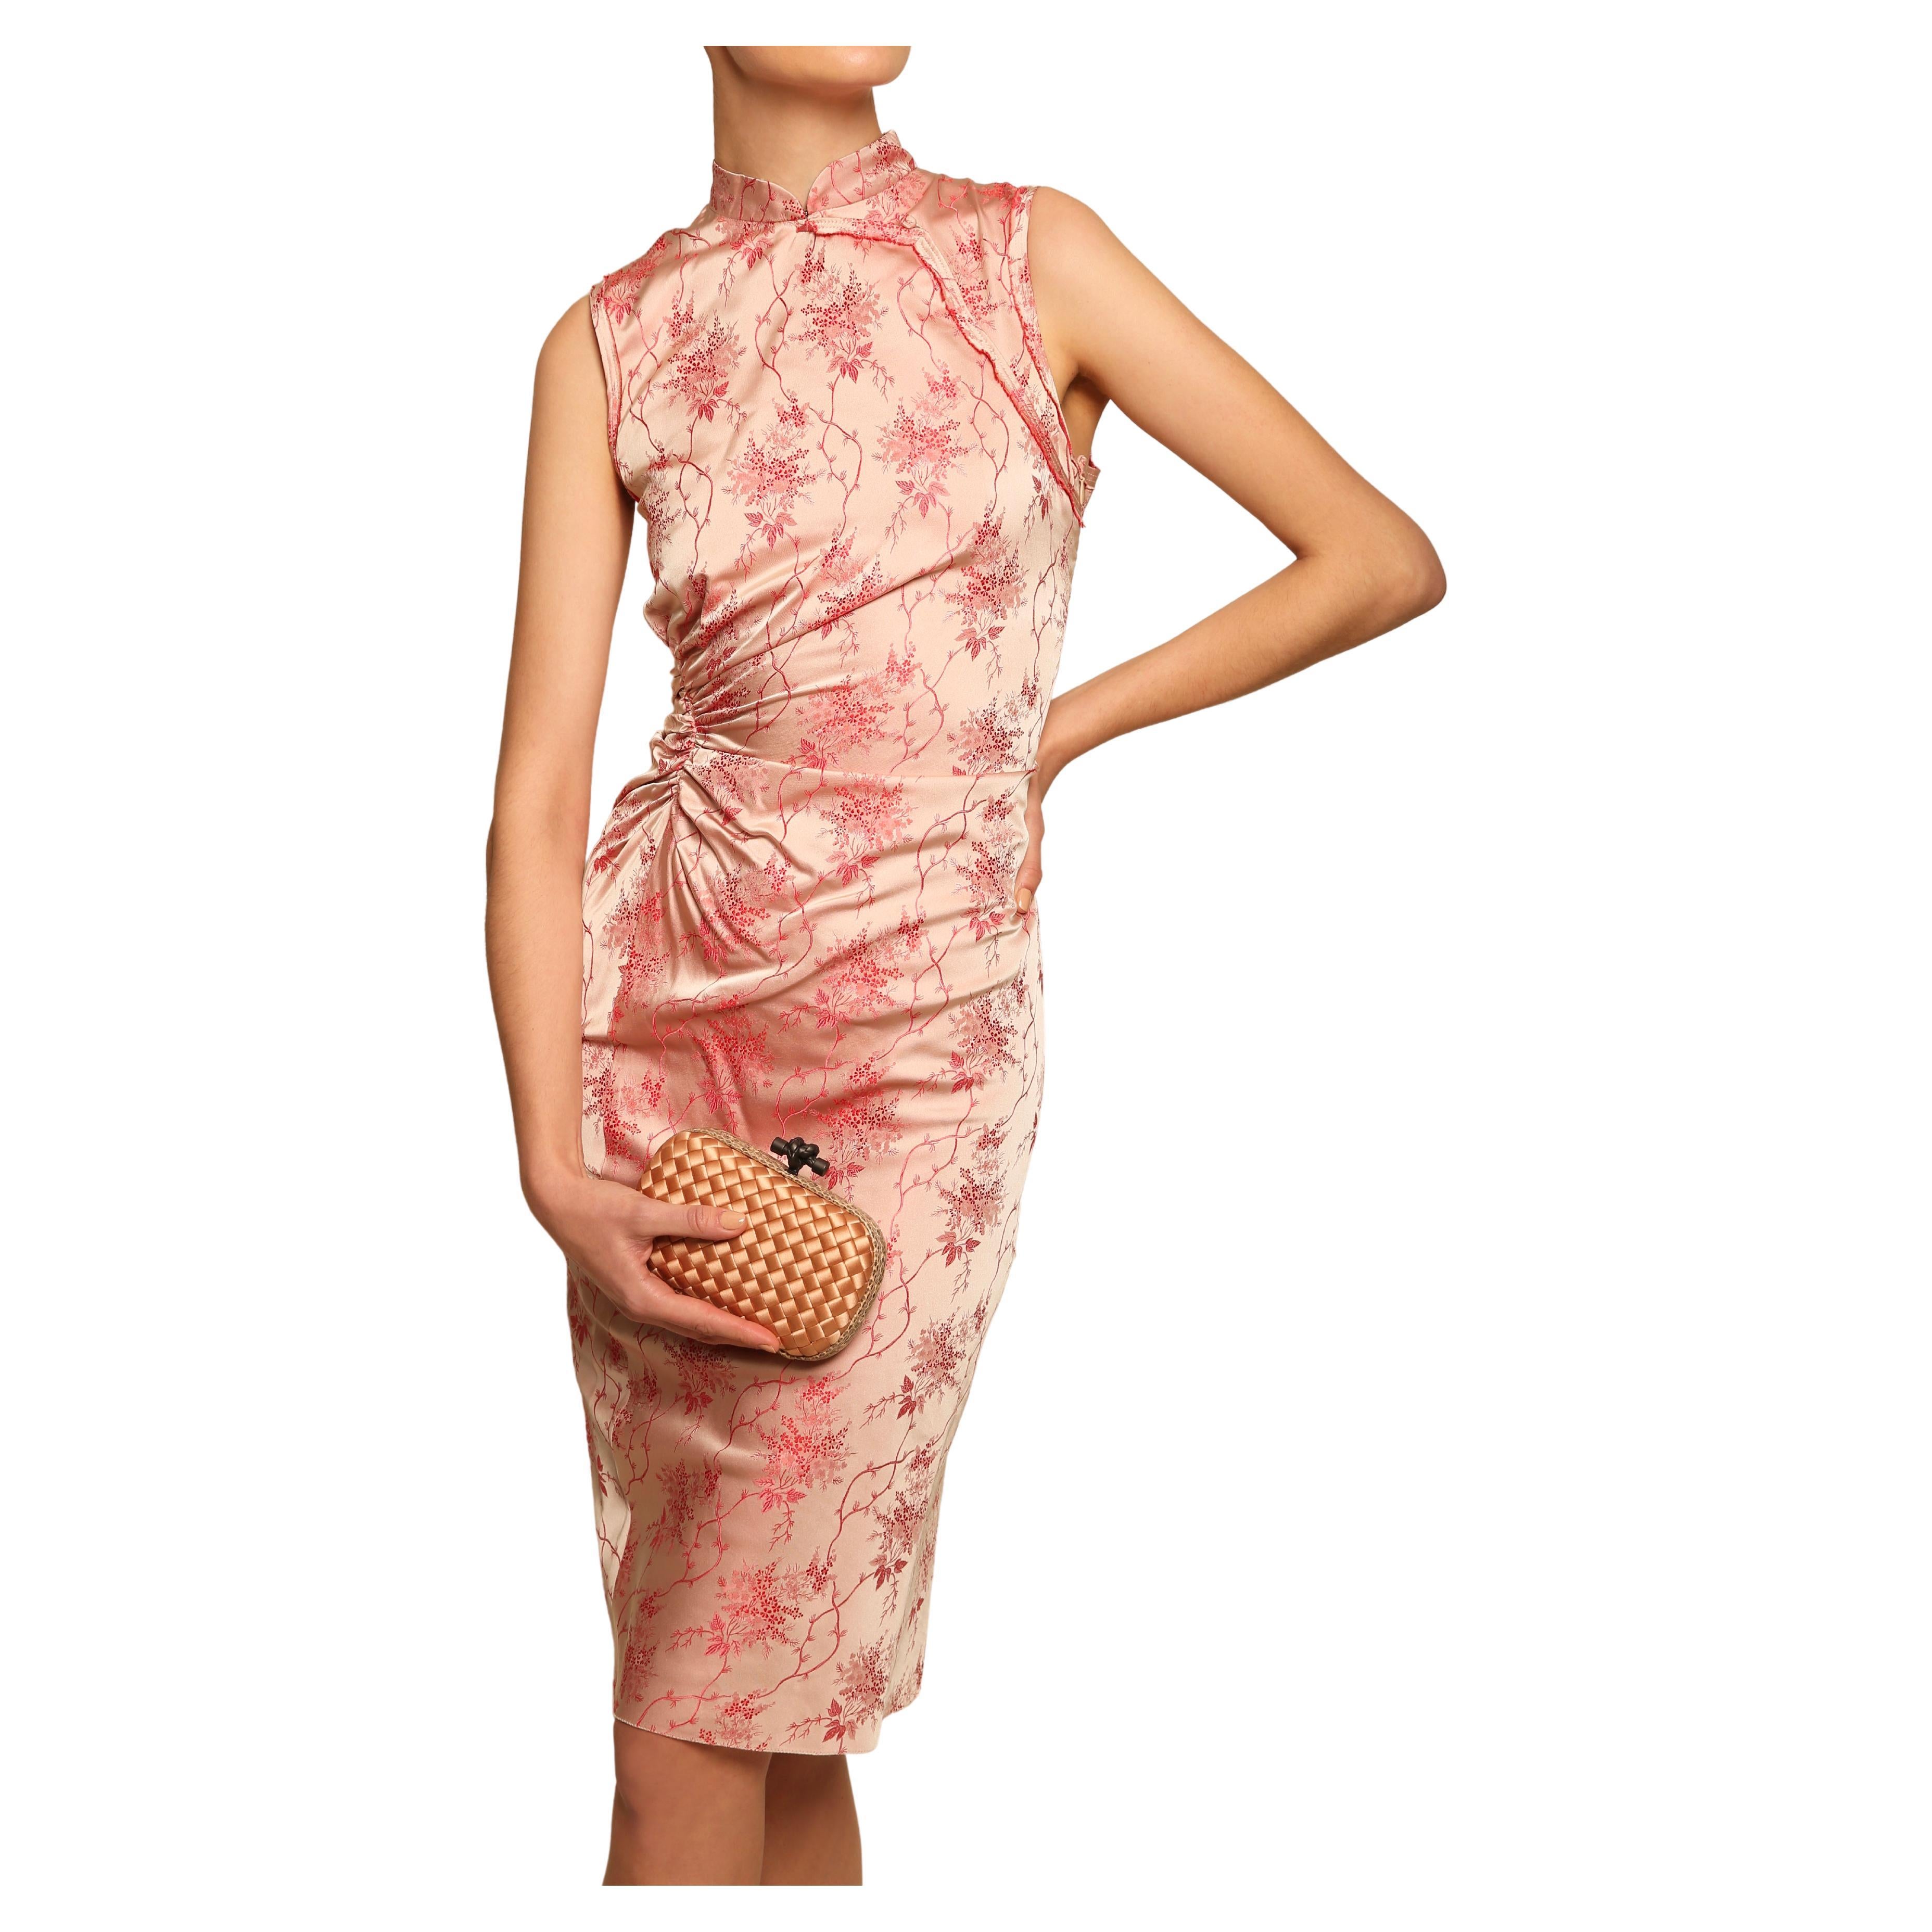 Prada S/S 97 vintage pink red floral silk brocade cheongsam midi length dress